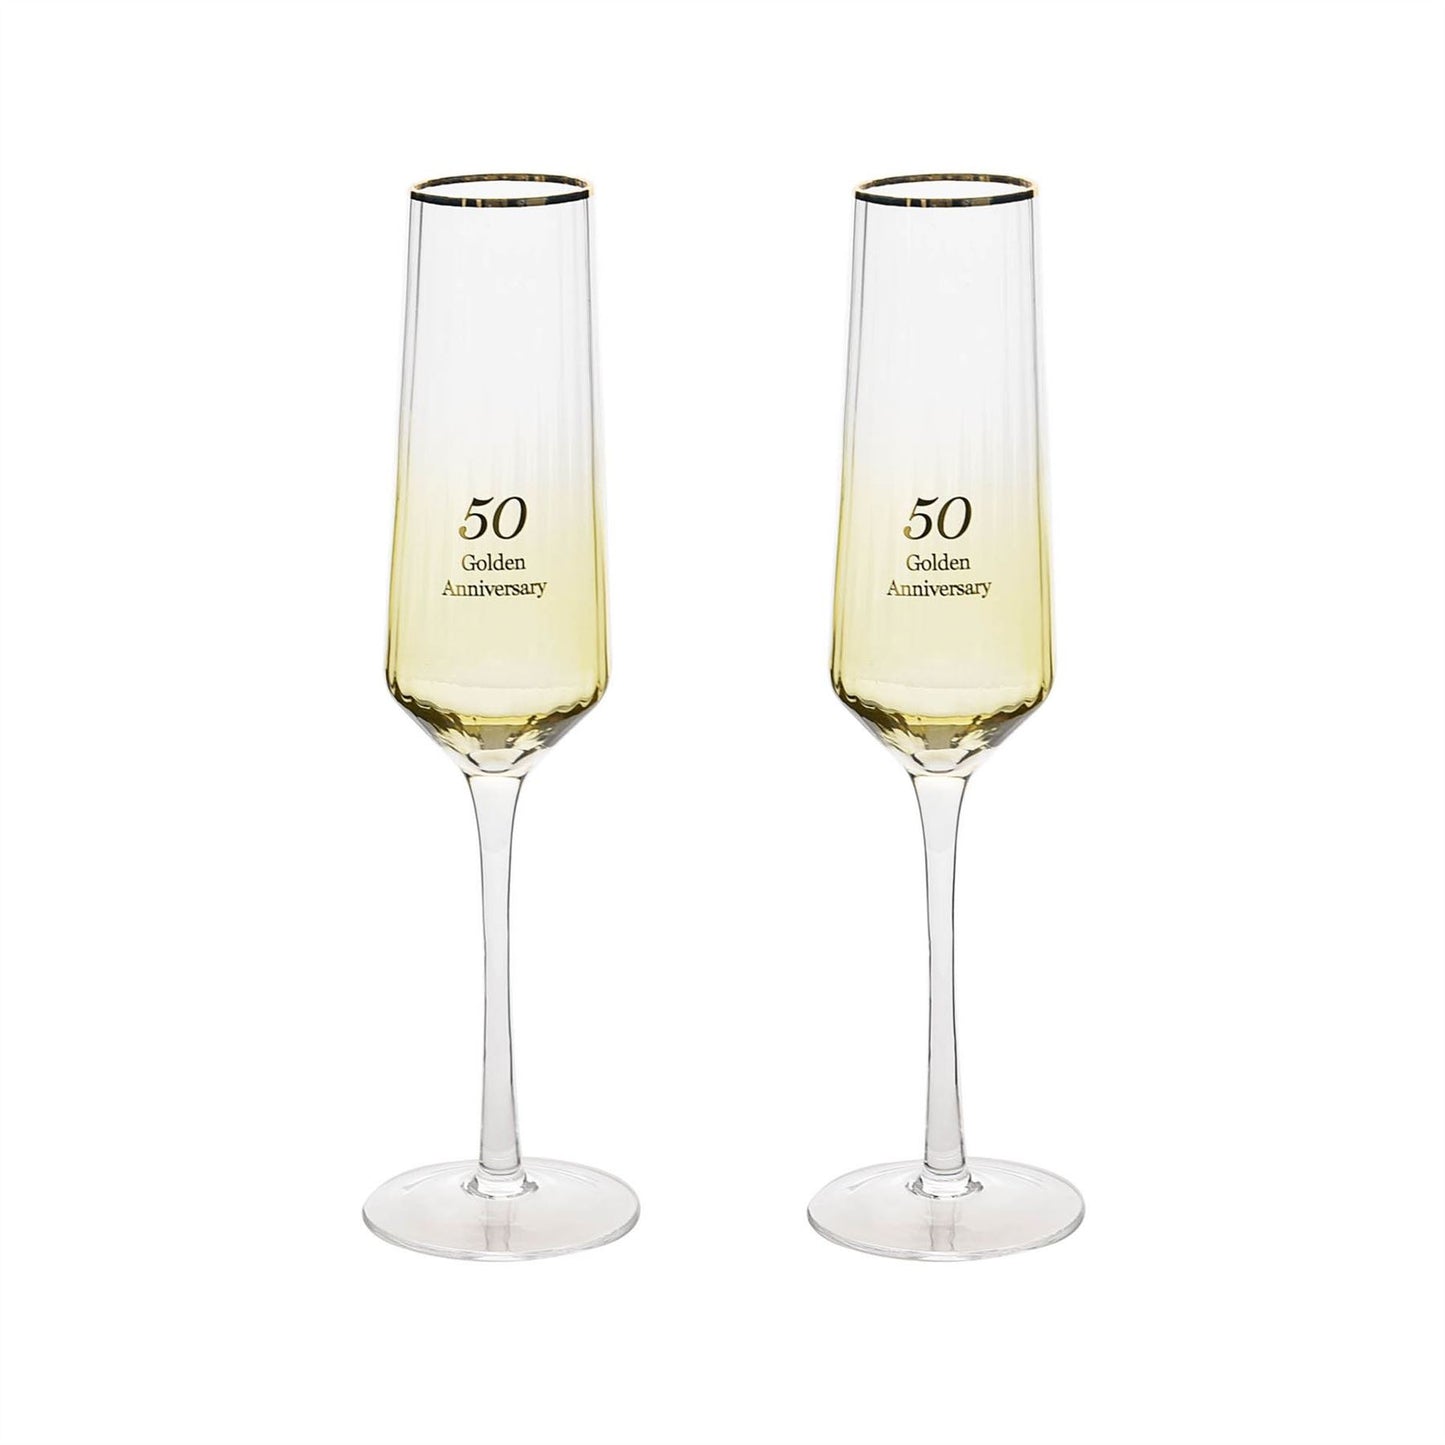 Amore Set of 2 Flute Glasses - 50th Anniversary (MINIMUM ORDER QUANTITY 2)